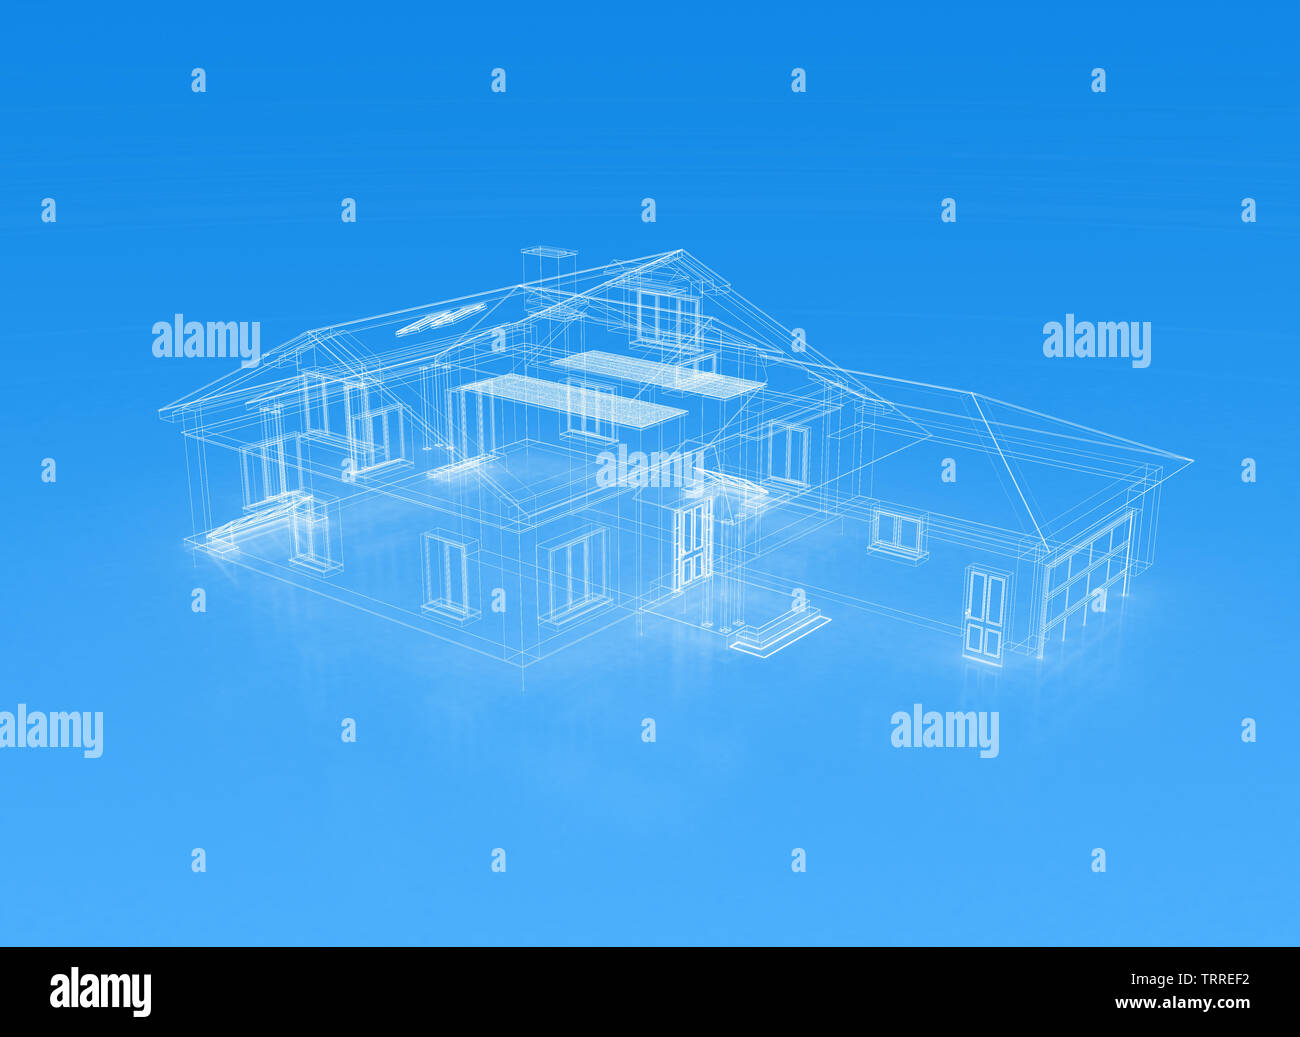 Architecture design blueprint of house, 3D illustration Stock Photo